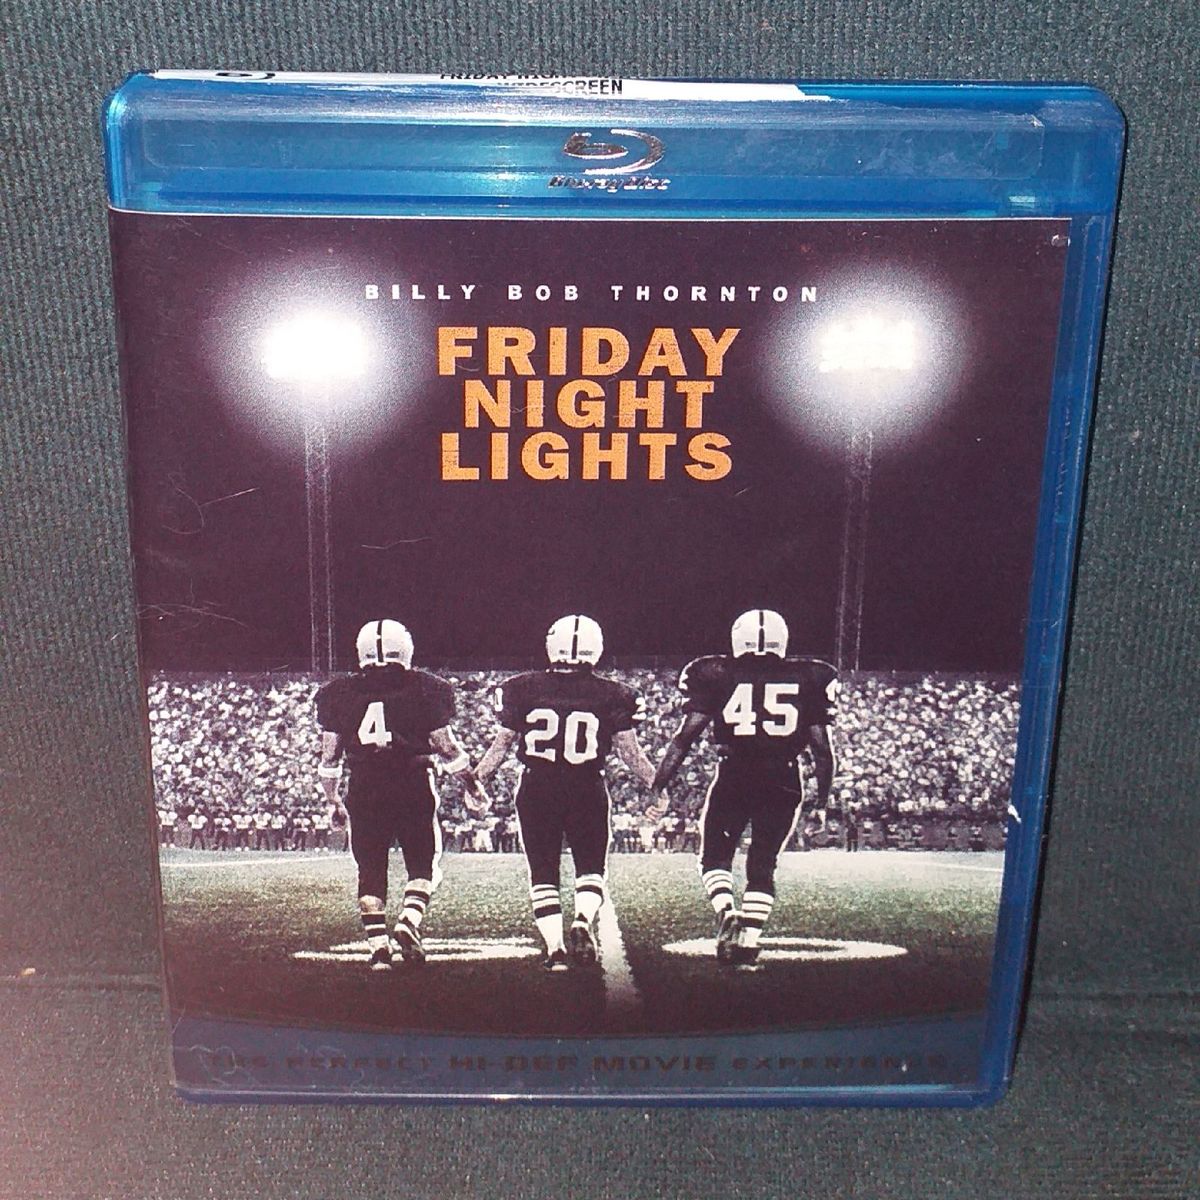  Friday Night Lights (Widescreen Edition) : Billy Bob